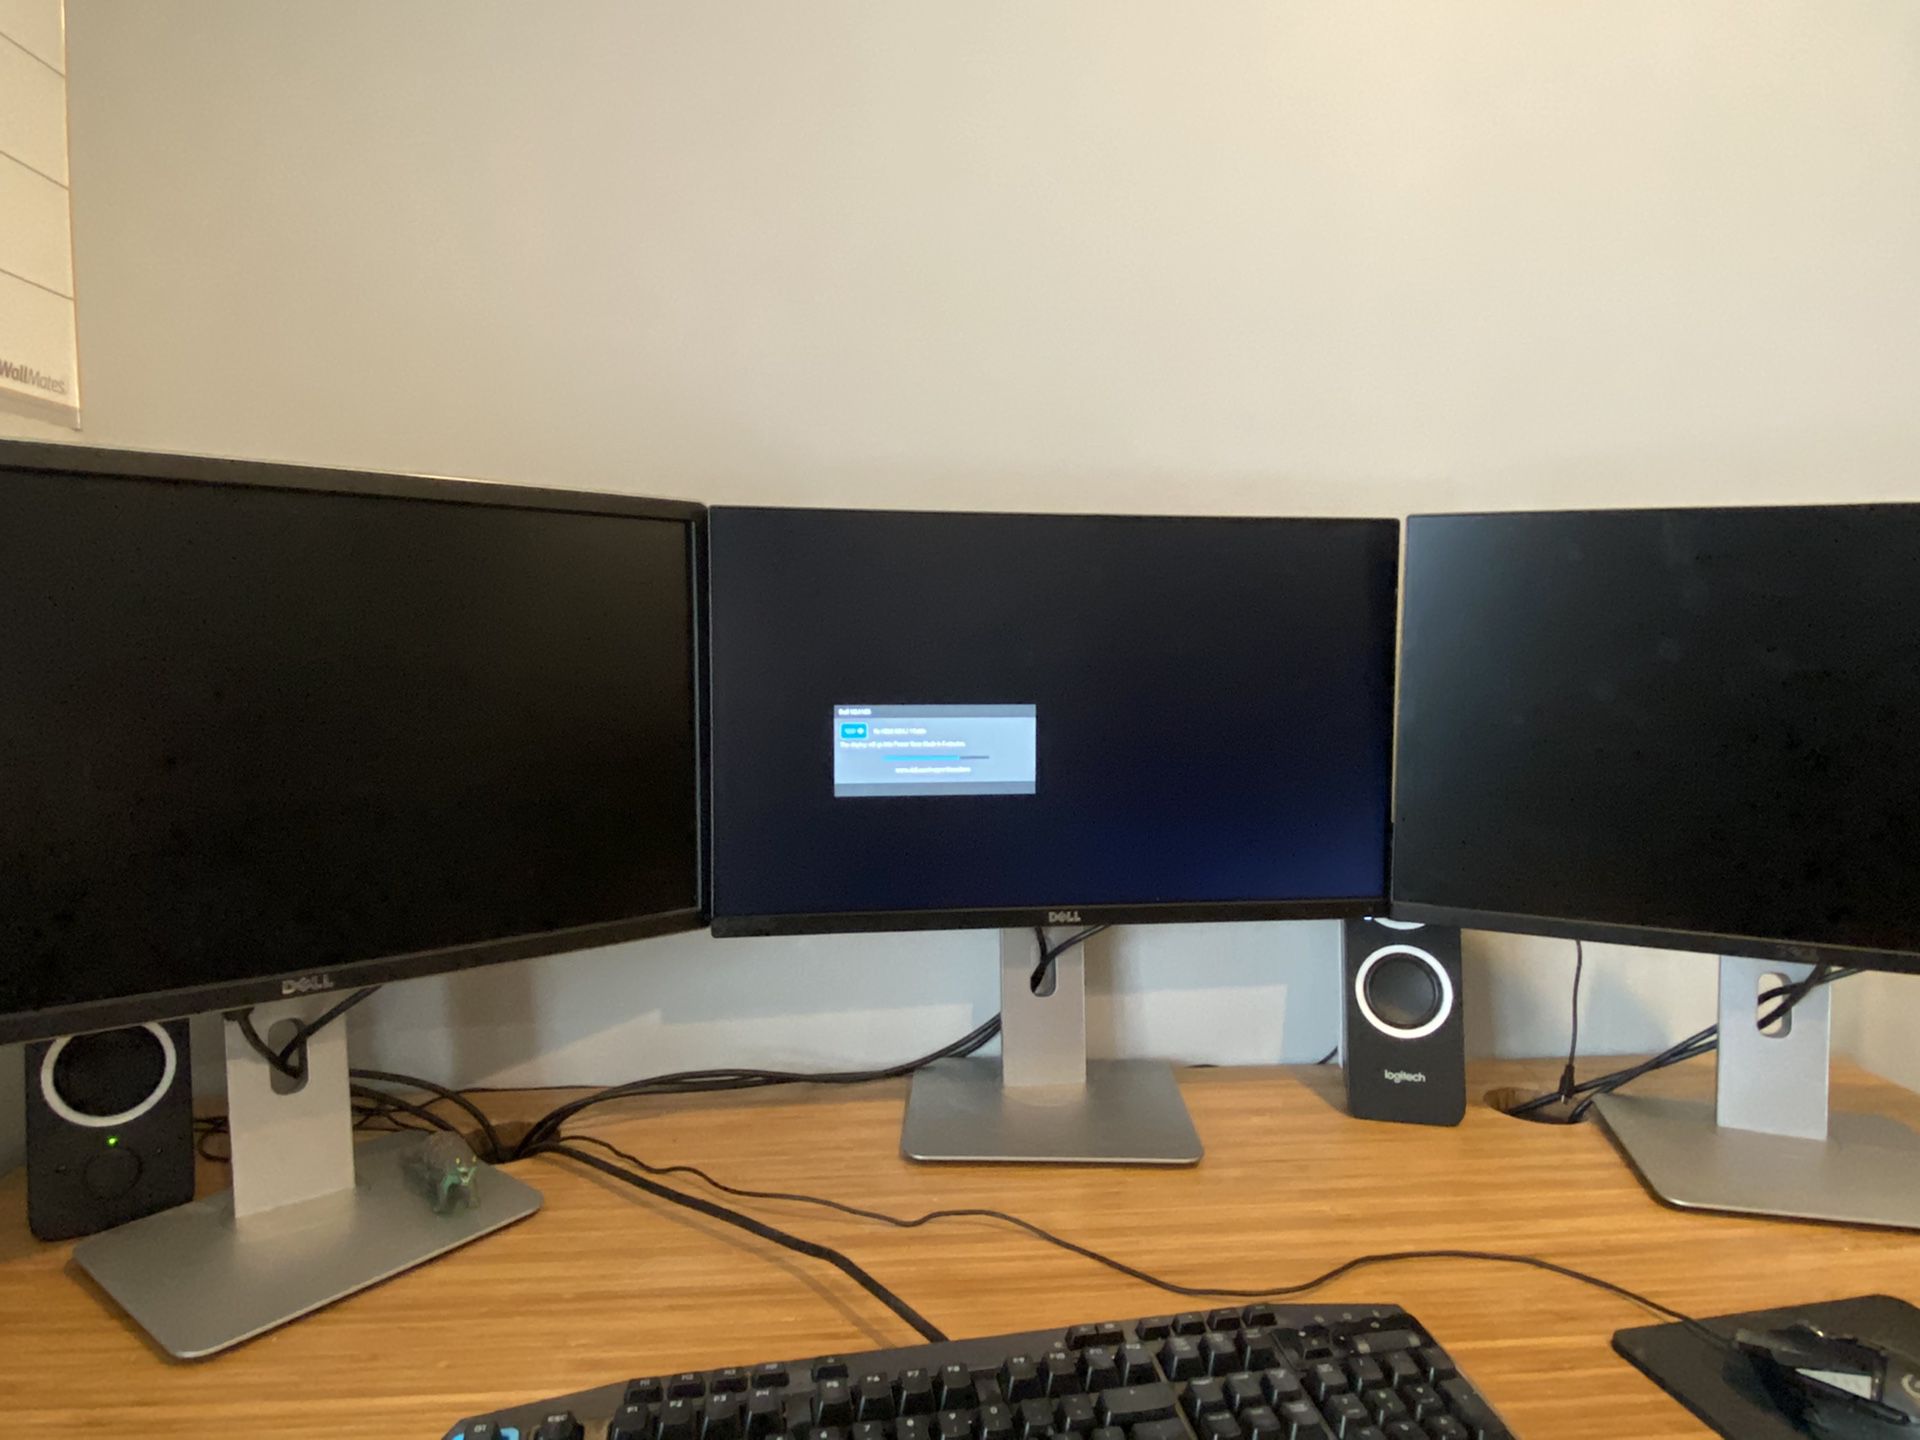 Dell 24” monitors